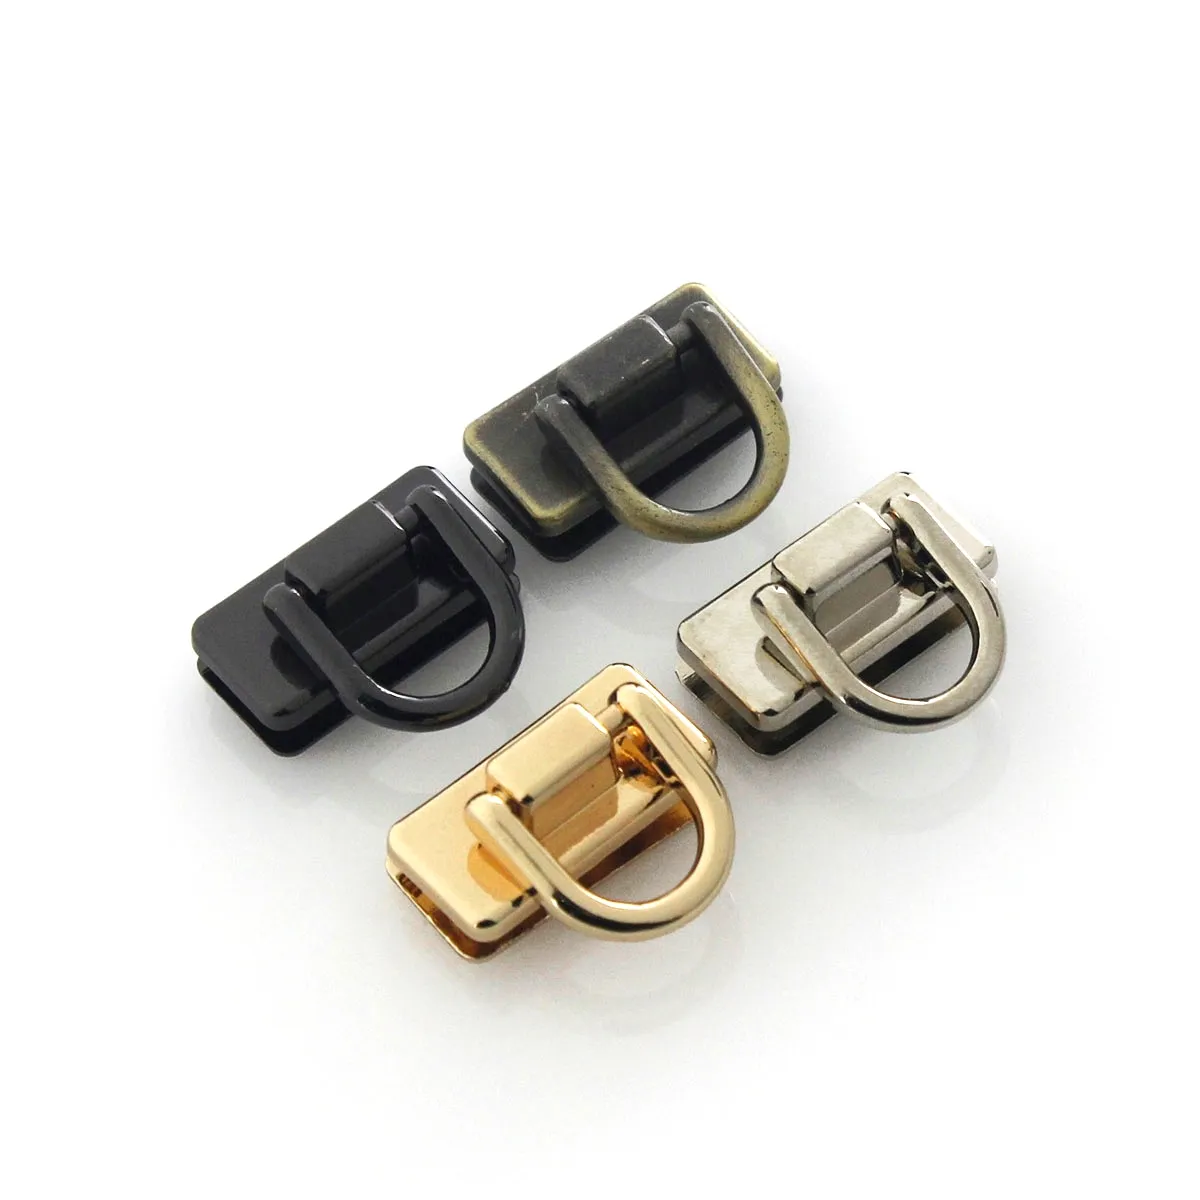 Fashion Metal Bag Side Edge Hang Buckle Clip With D Rings for DIY Leather Craft Bag Strap Belt Handle Shoulder Accessories